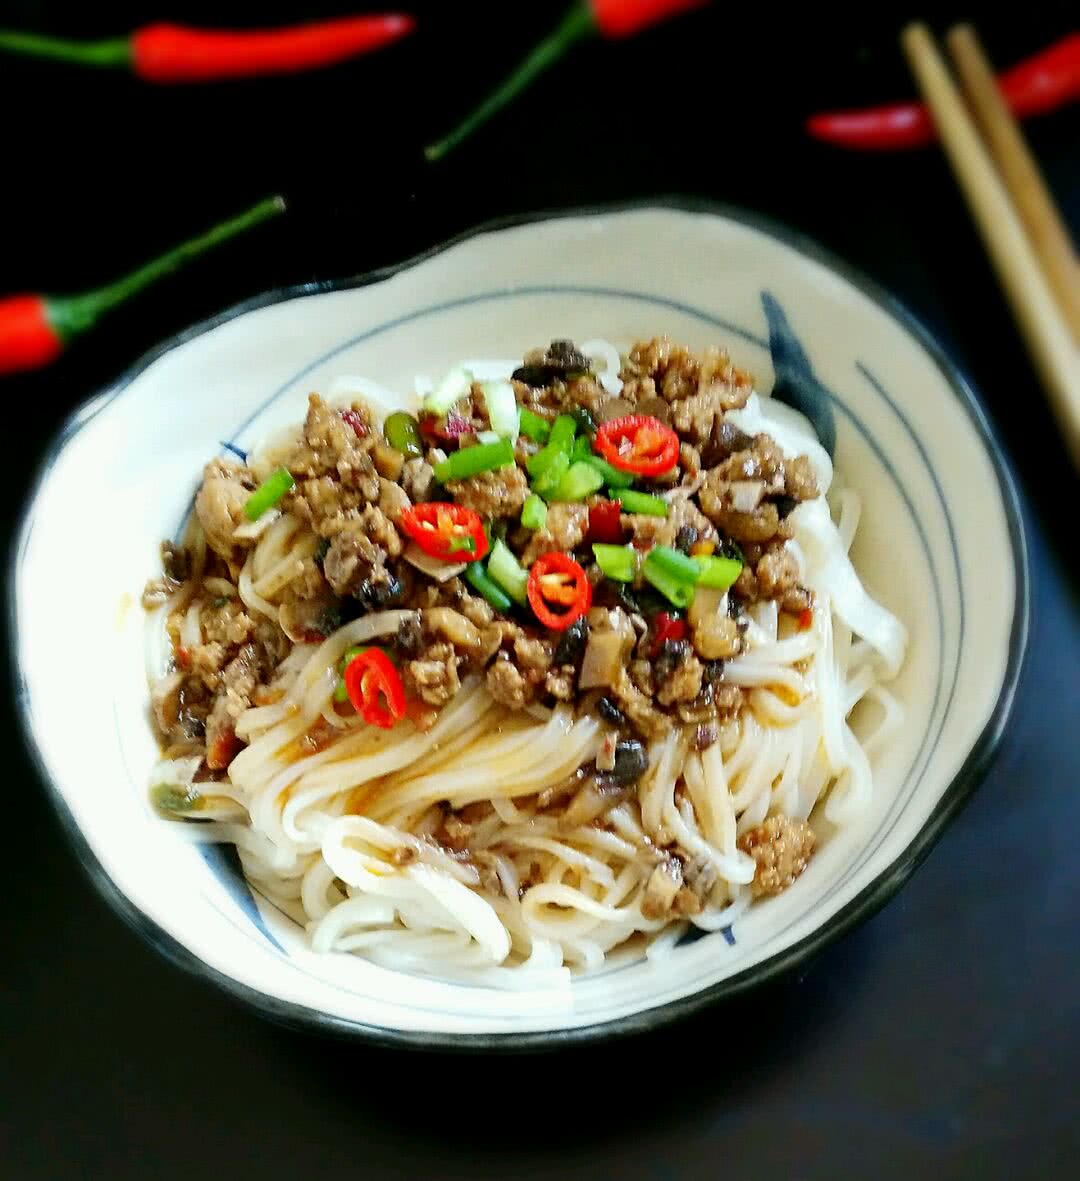 ZapPaLang: 香菇鸡丝面 Dried mushroom and shredded chicken noodles